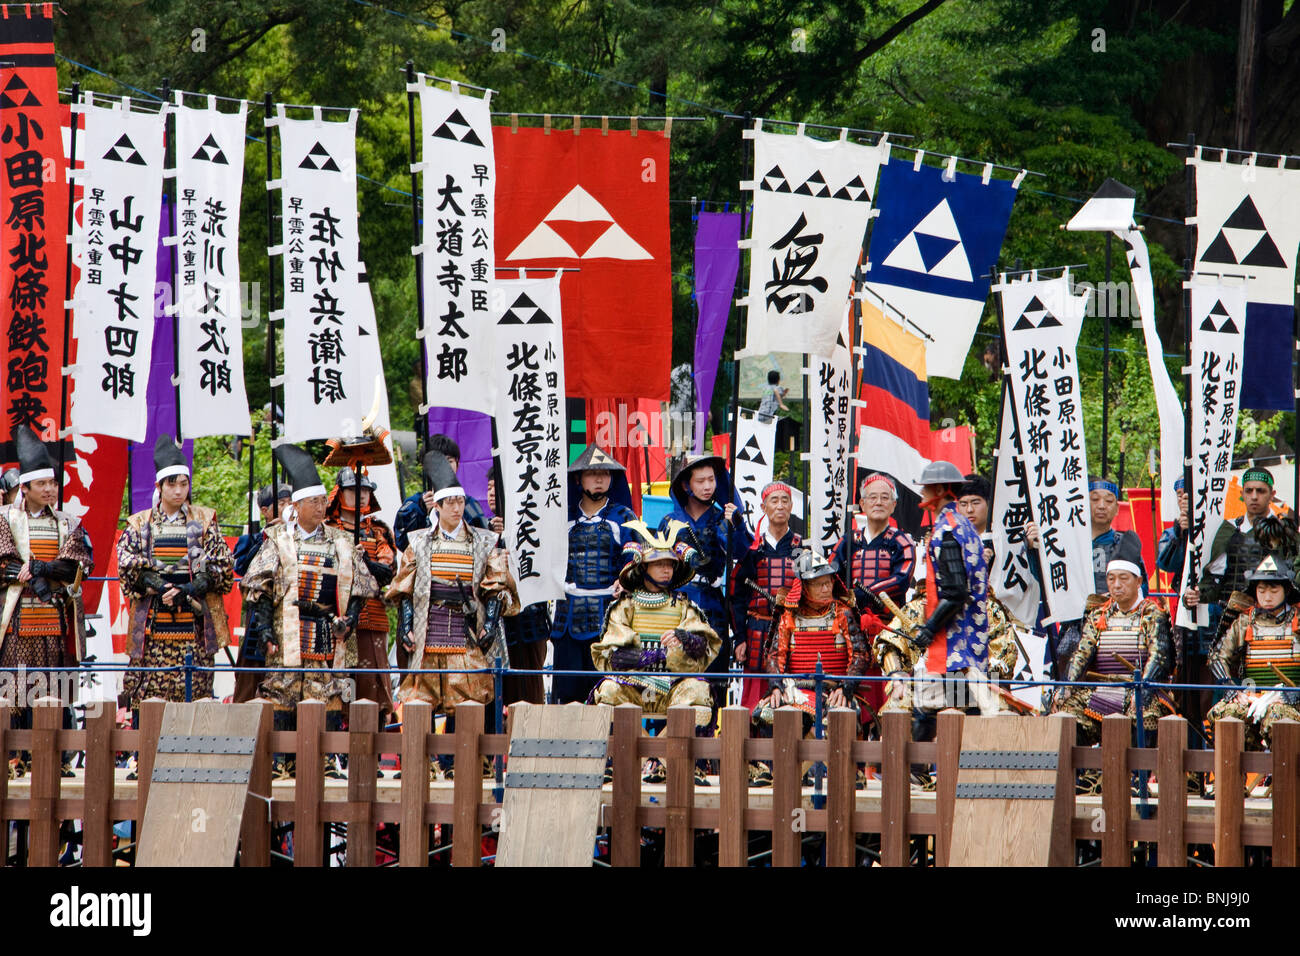 Japan Asia Odawara castle castle festival men national costumes costumes custom flags Stock Photo